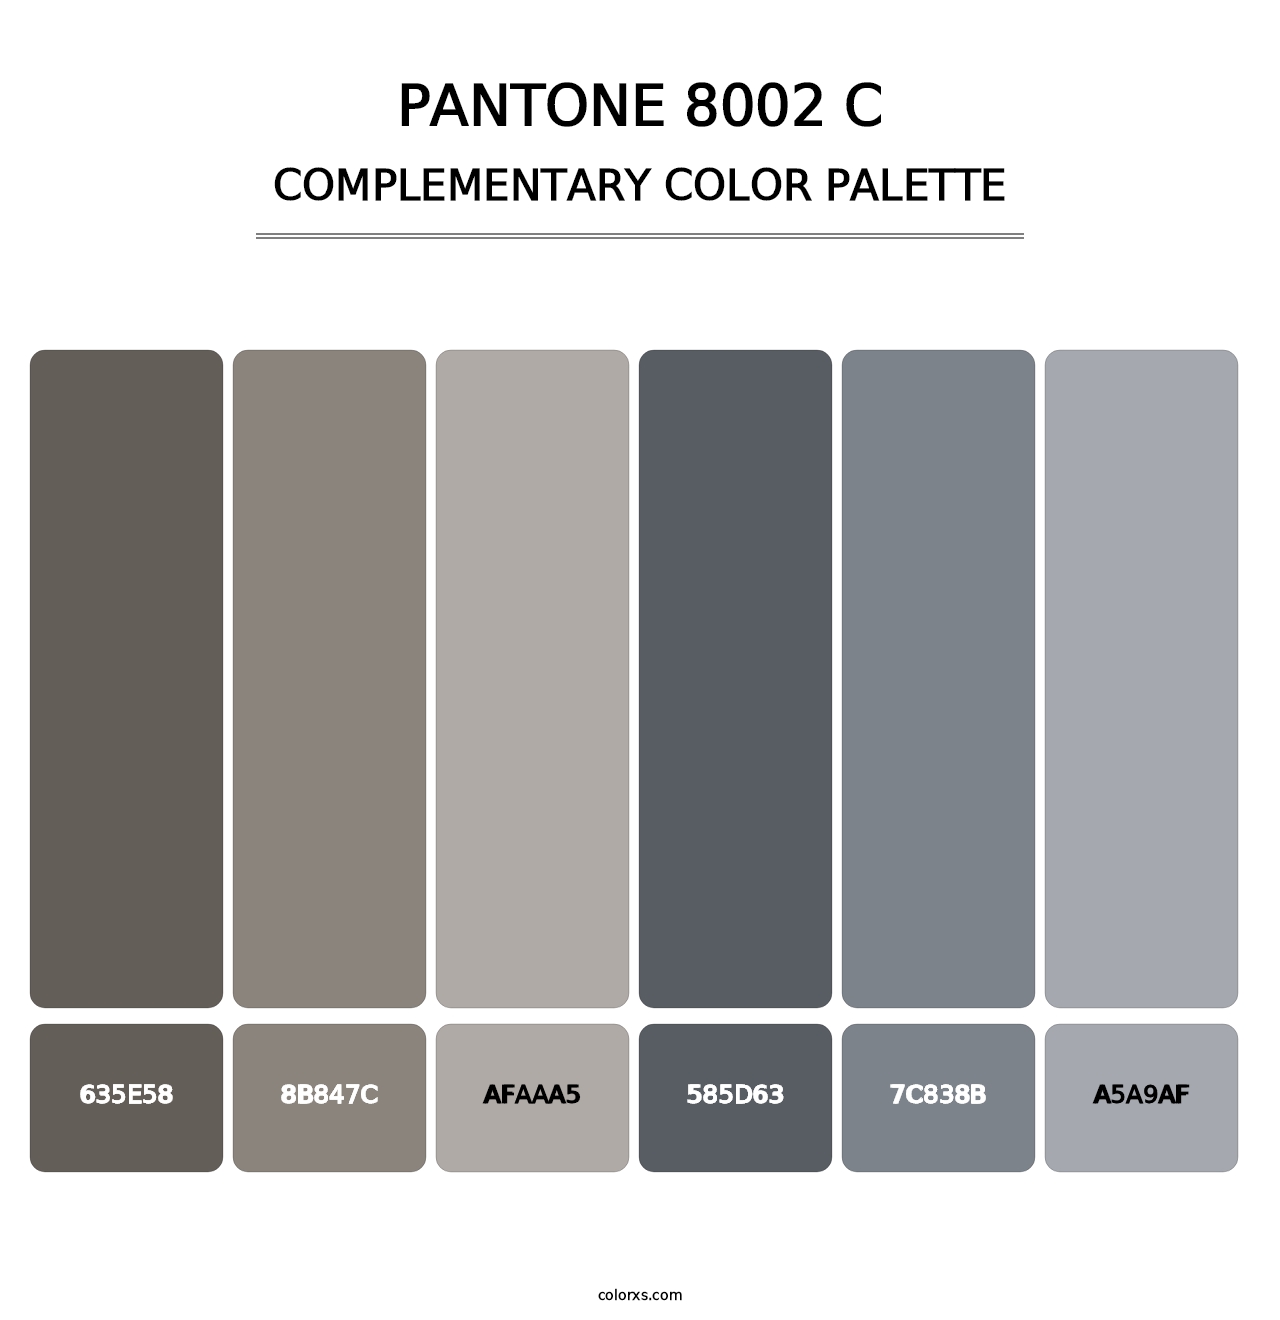 PANTONE 8002 C - Complementary Color Palette